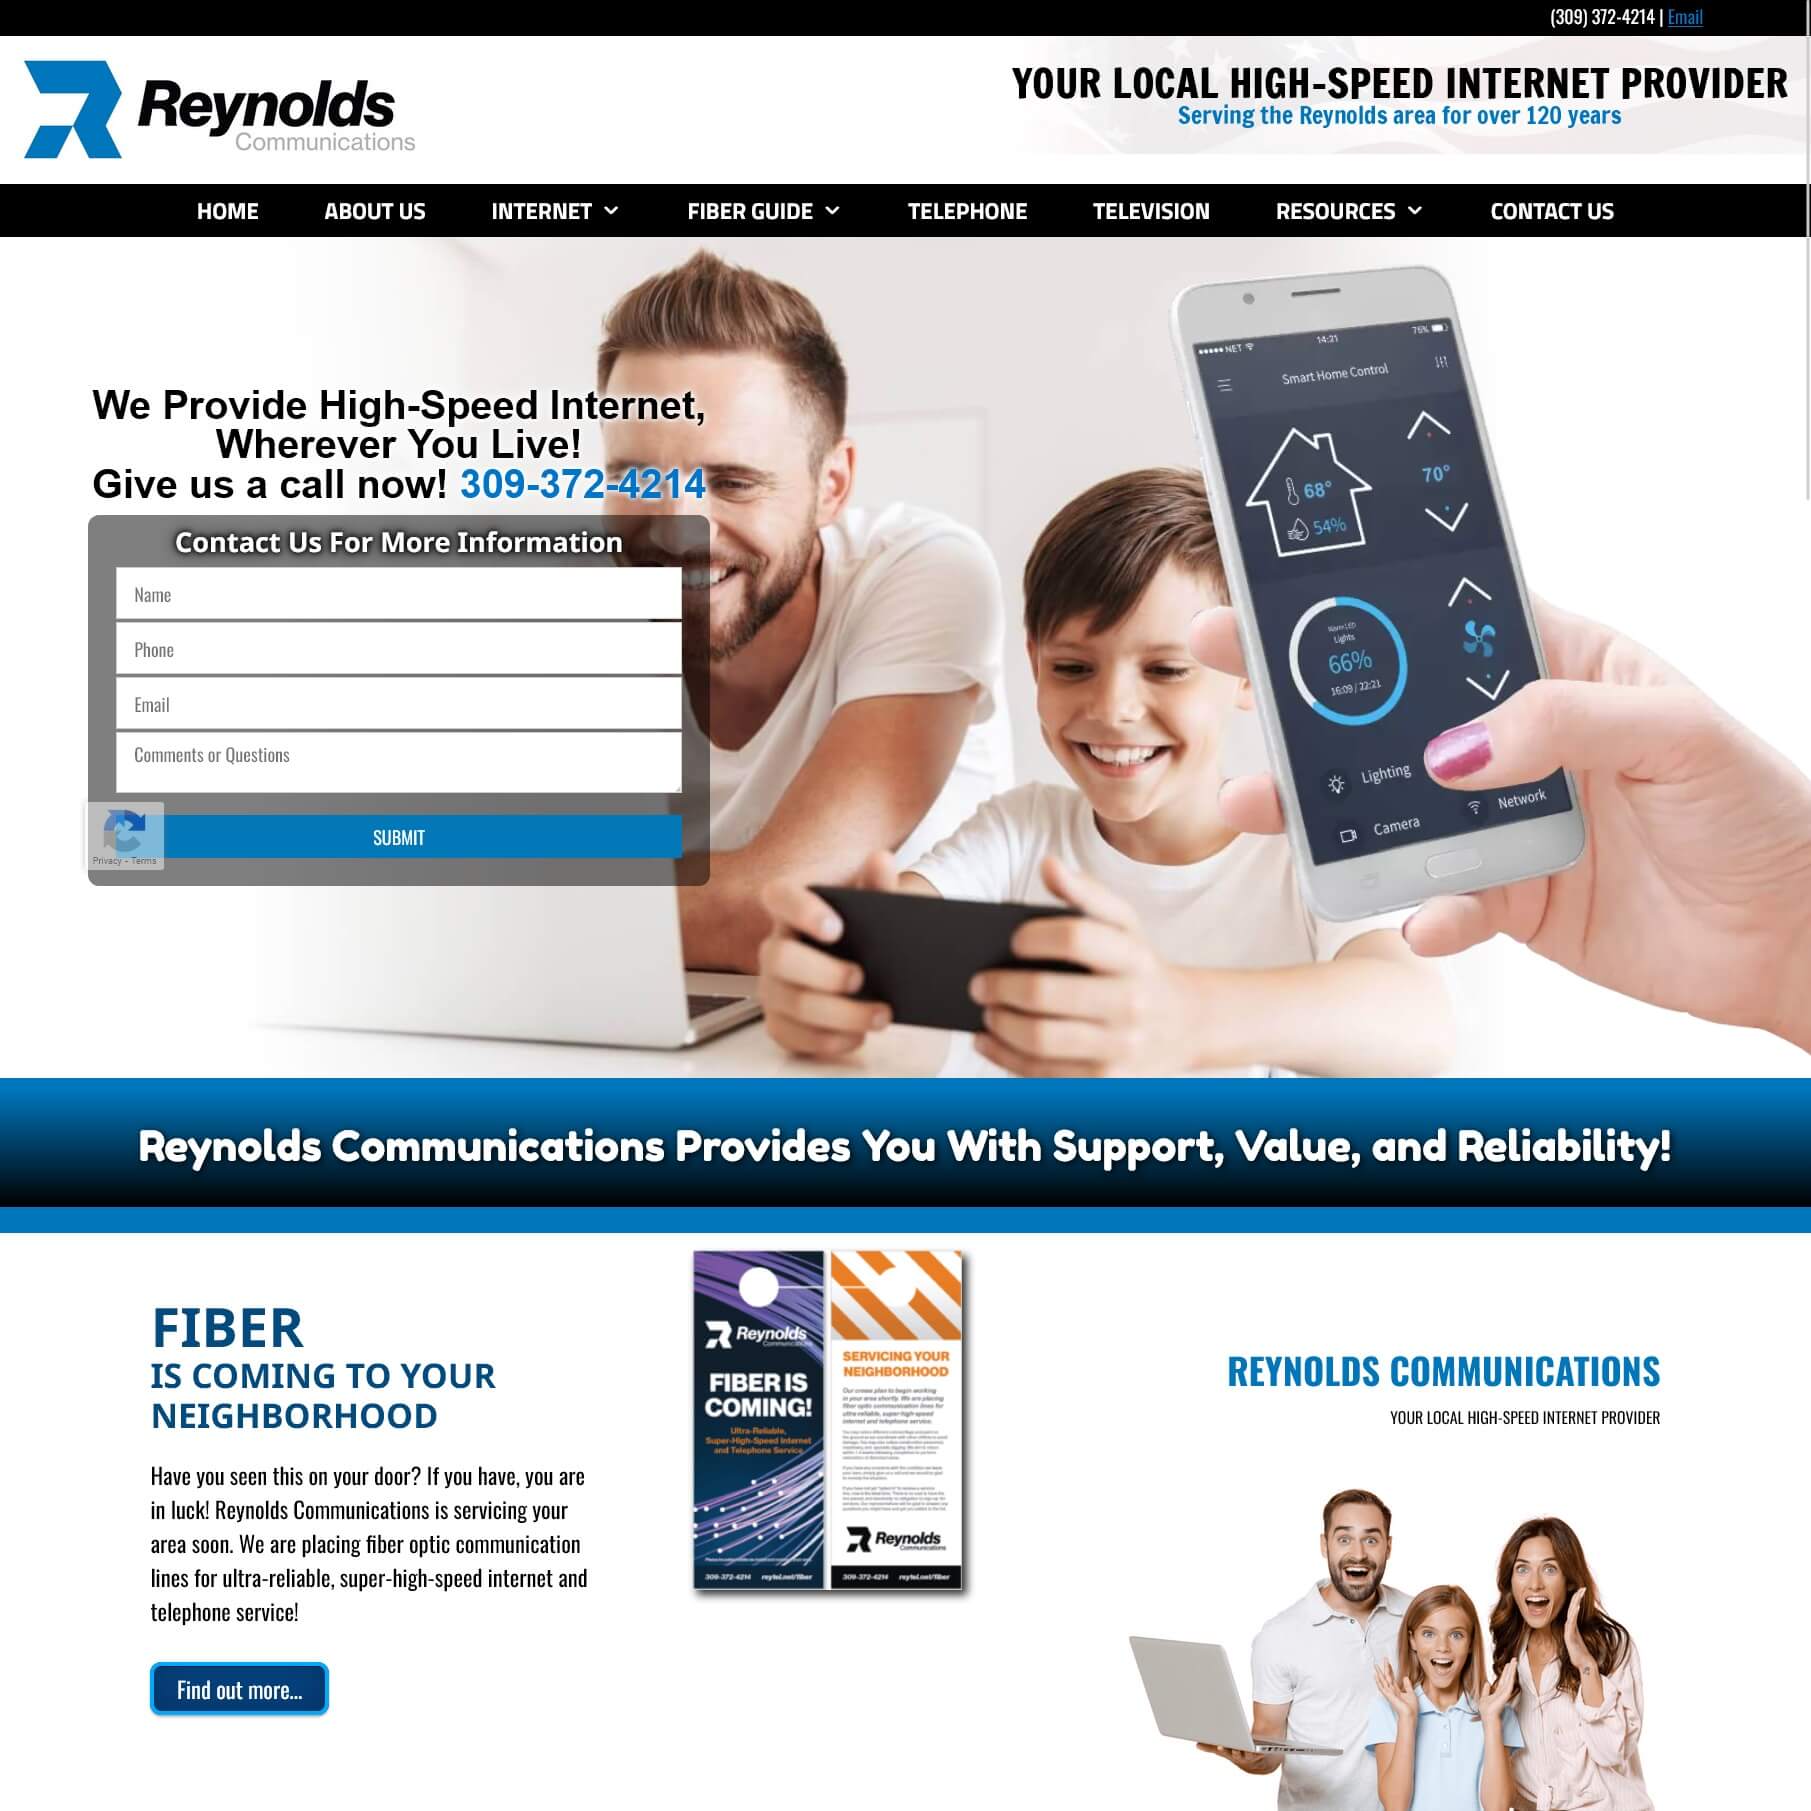 Reynolds Communications